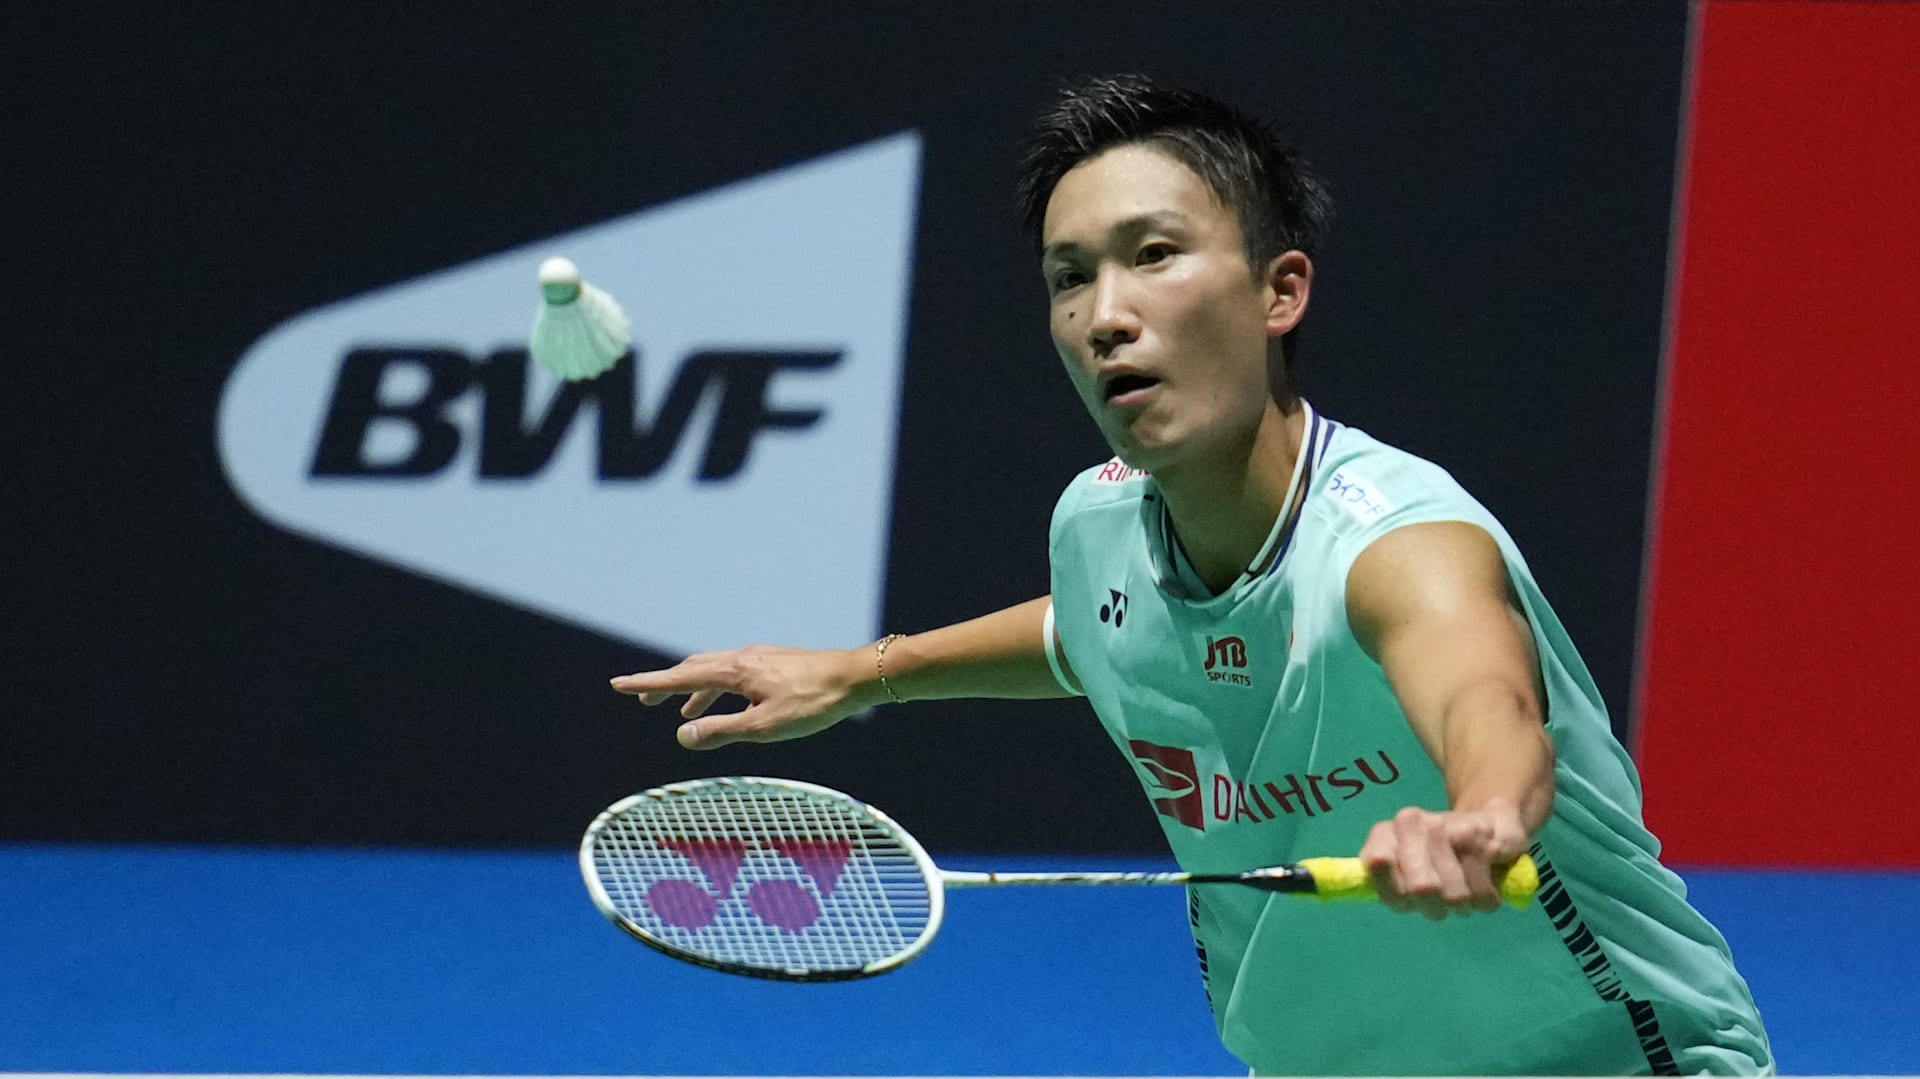 Badminton Momota Kento fighting to restore his form and reputation for 2023 season